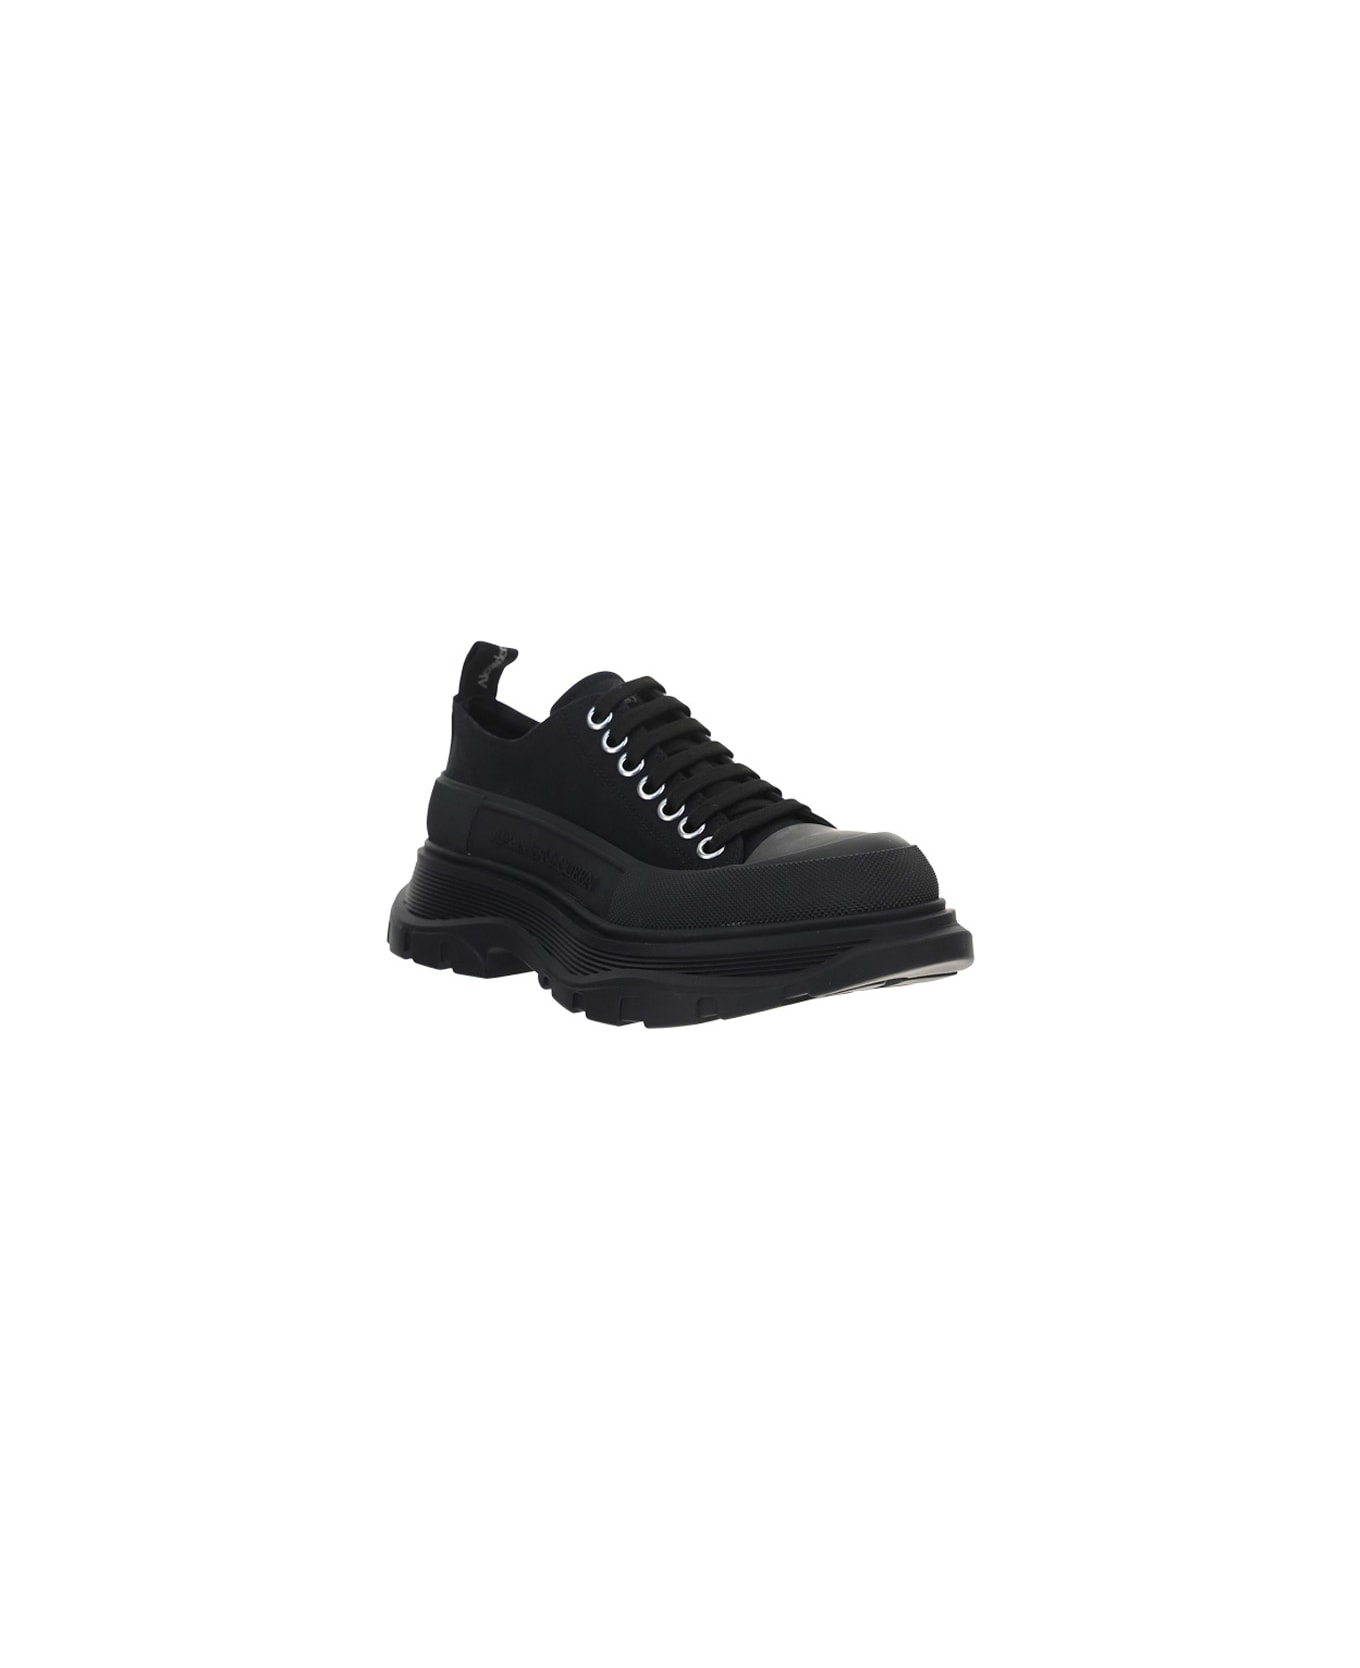 Alexander McQueen Tread Slick Laced Up Shoes - Black/black スニーカー